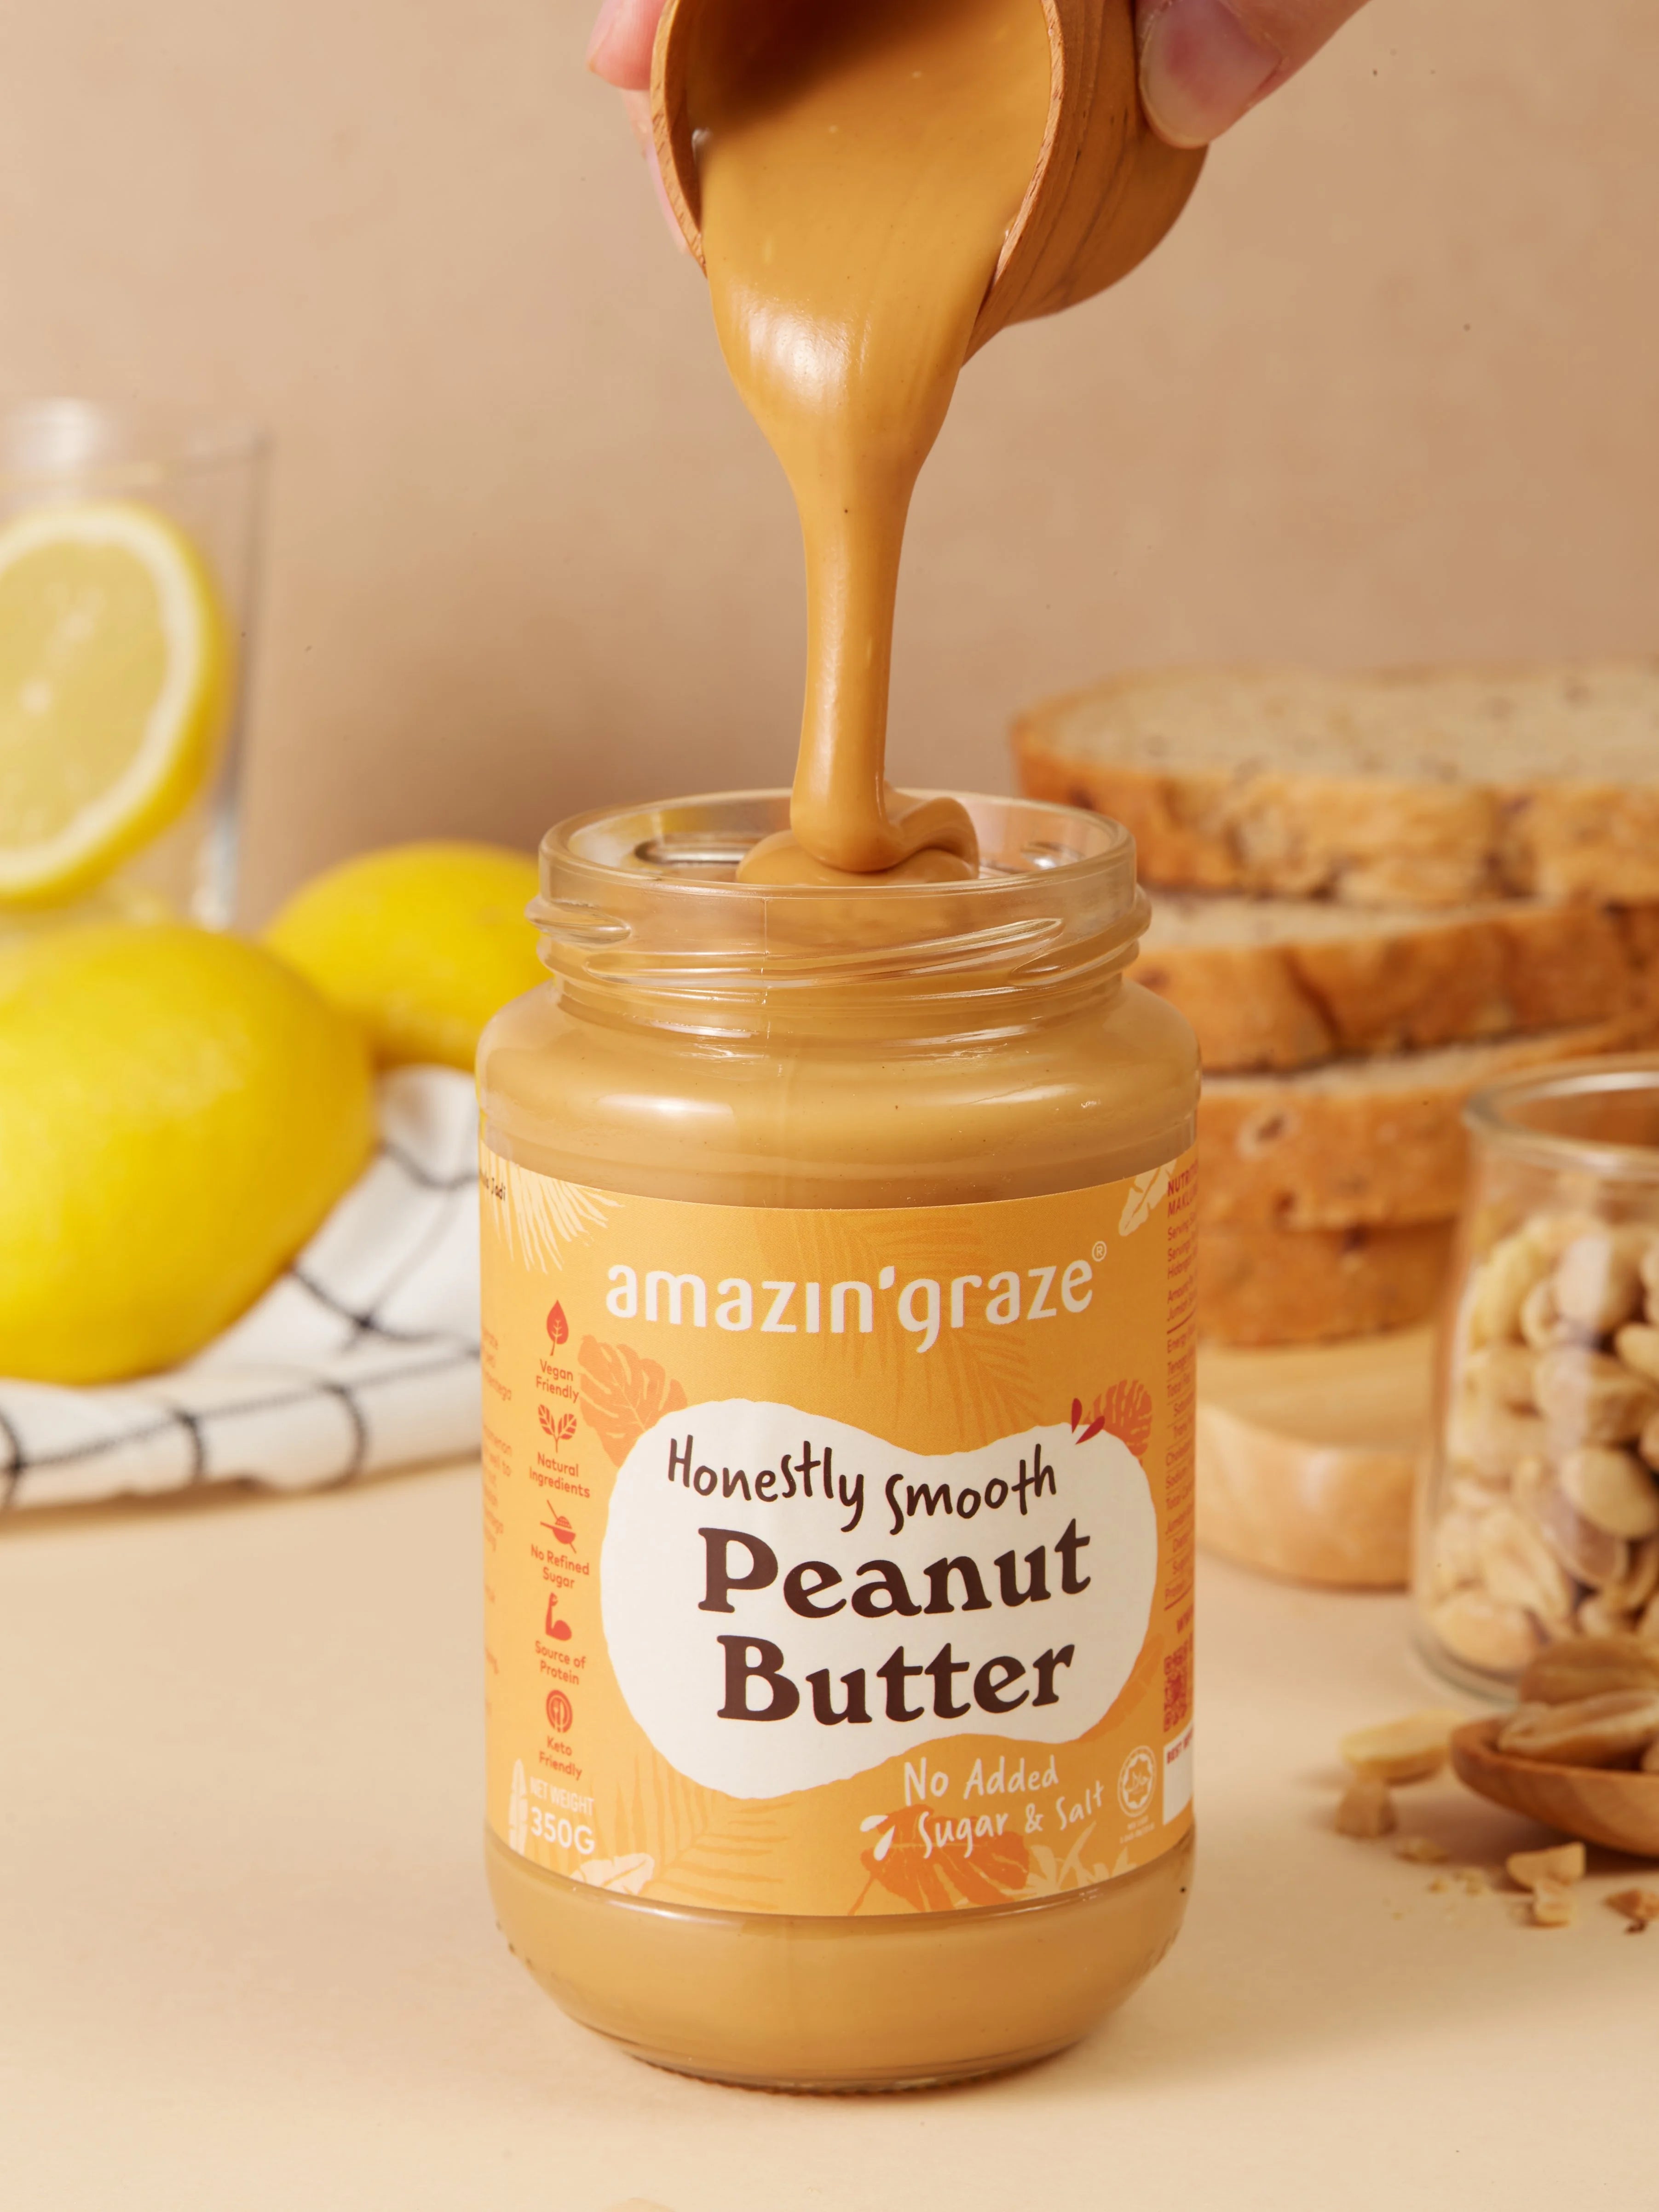 Amazin' Graze Smooth Peanut Butter [Salt & Sugar Free]